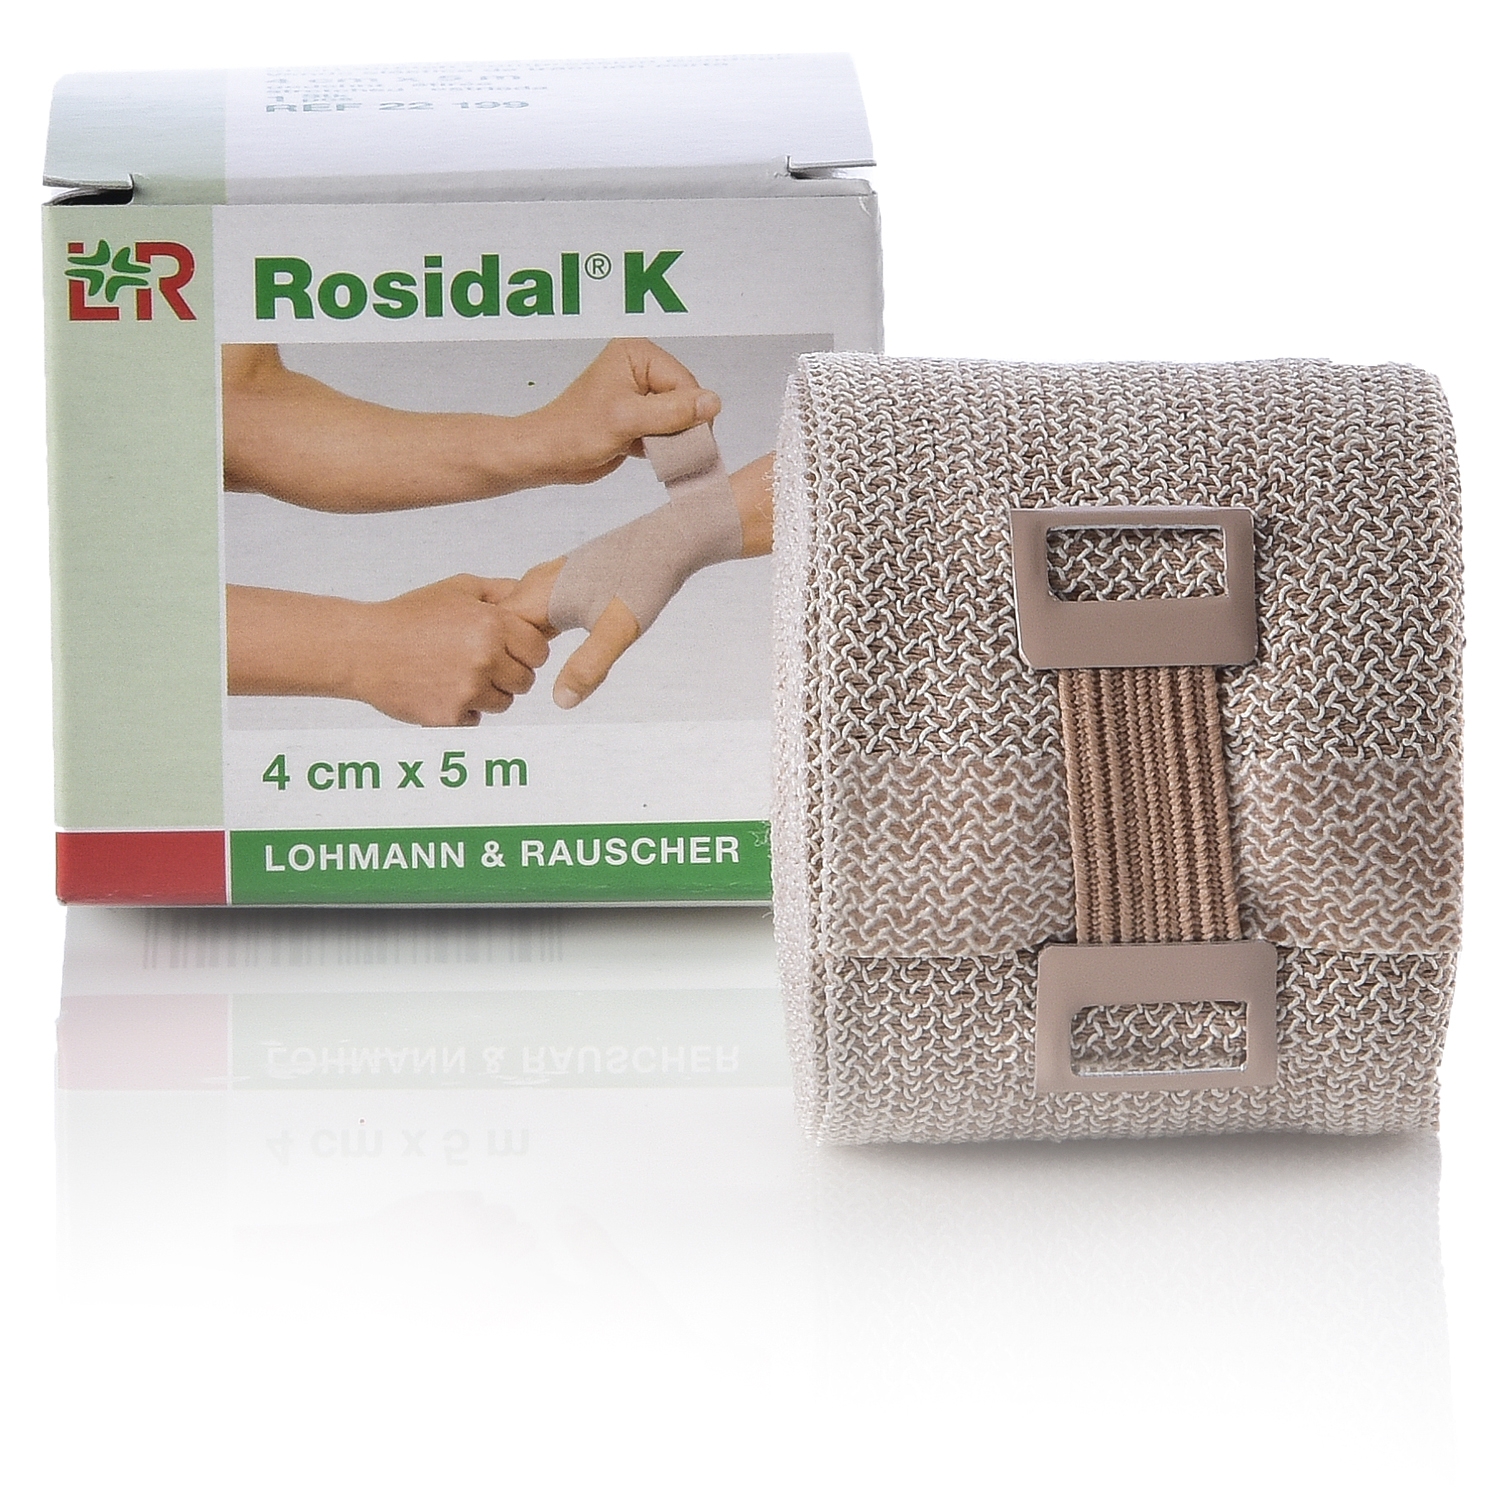 Rosidal K - 4 cm x 5 m